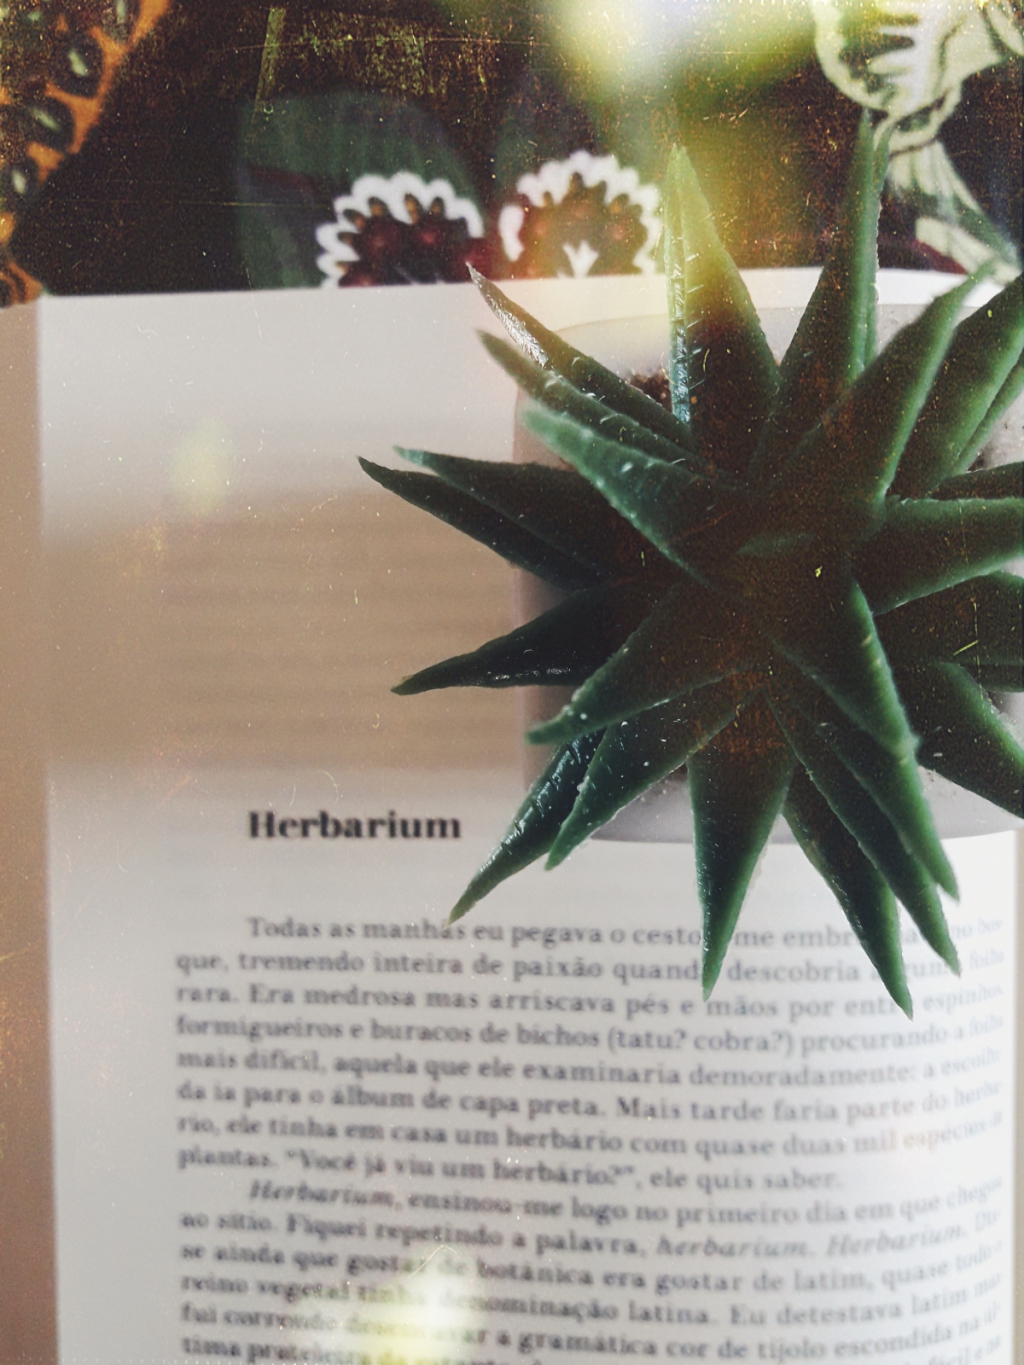 Herbarium, Os Contos, Companhia das Letras